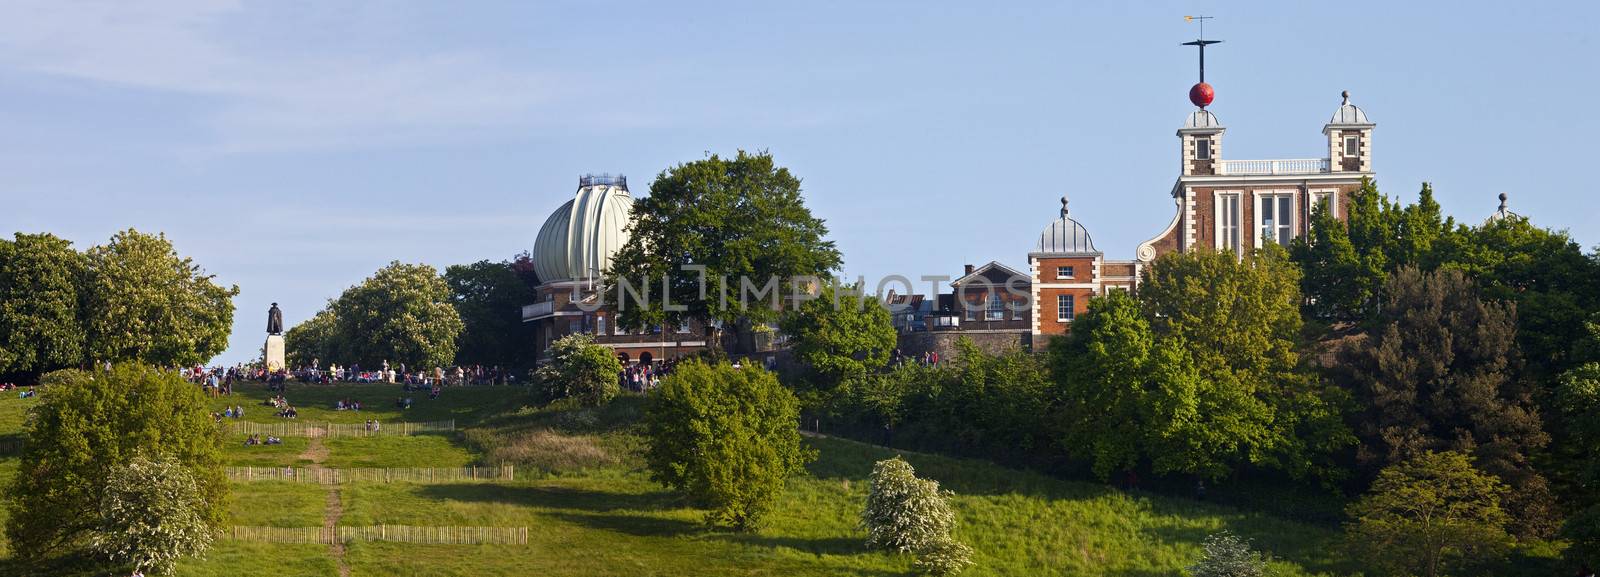 Royal Observatory in Greenwich, London by chrisdorney